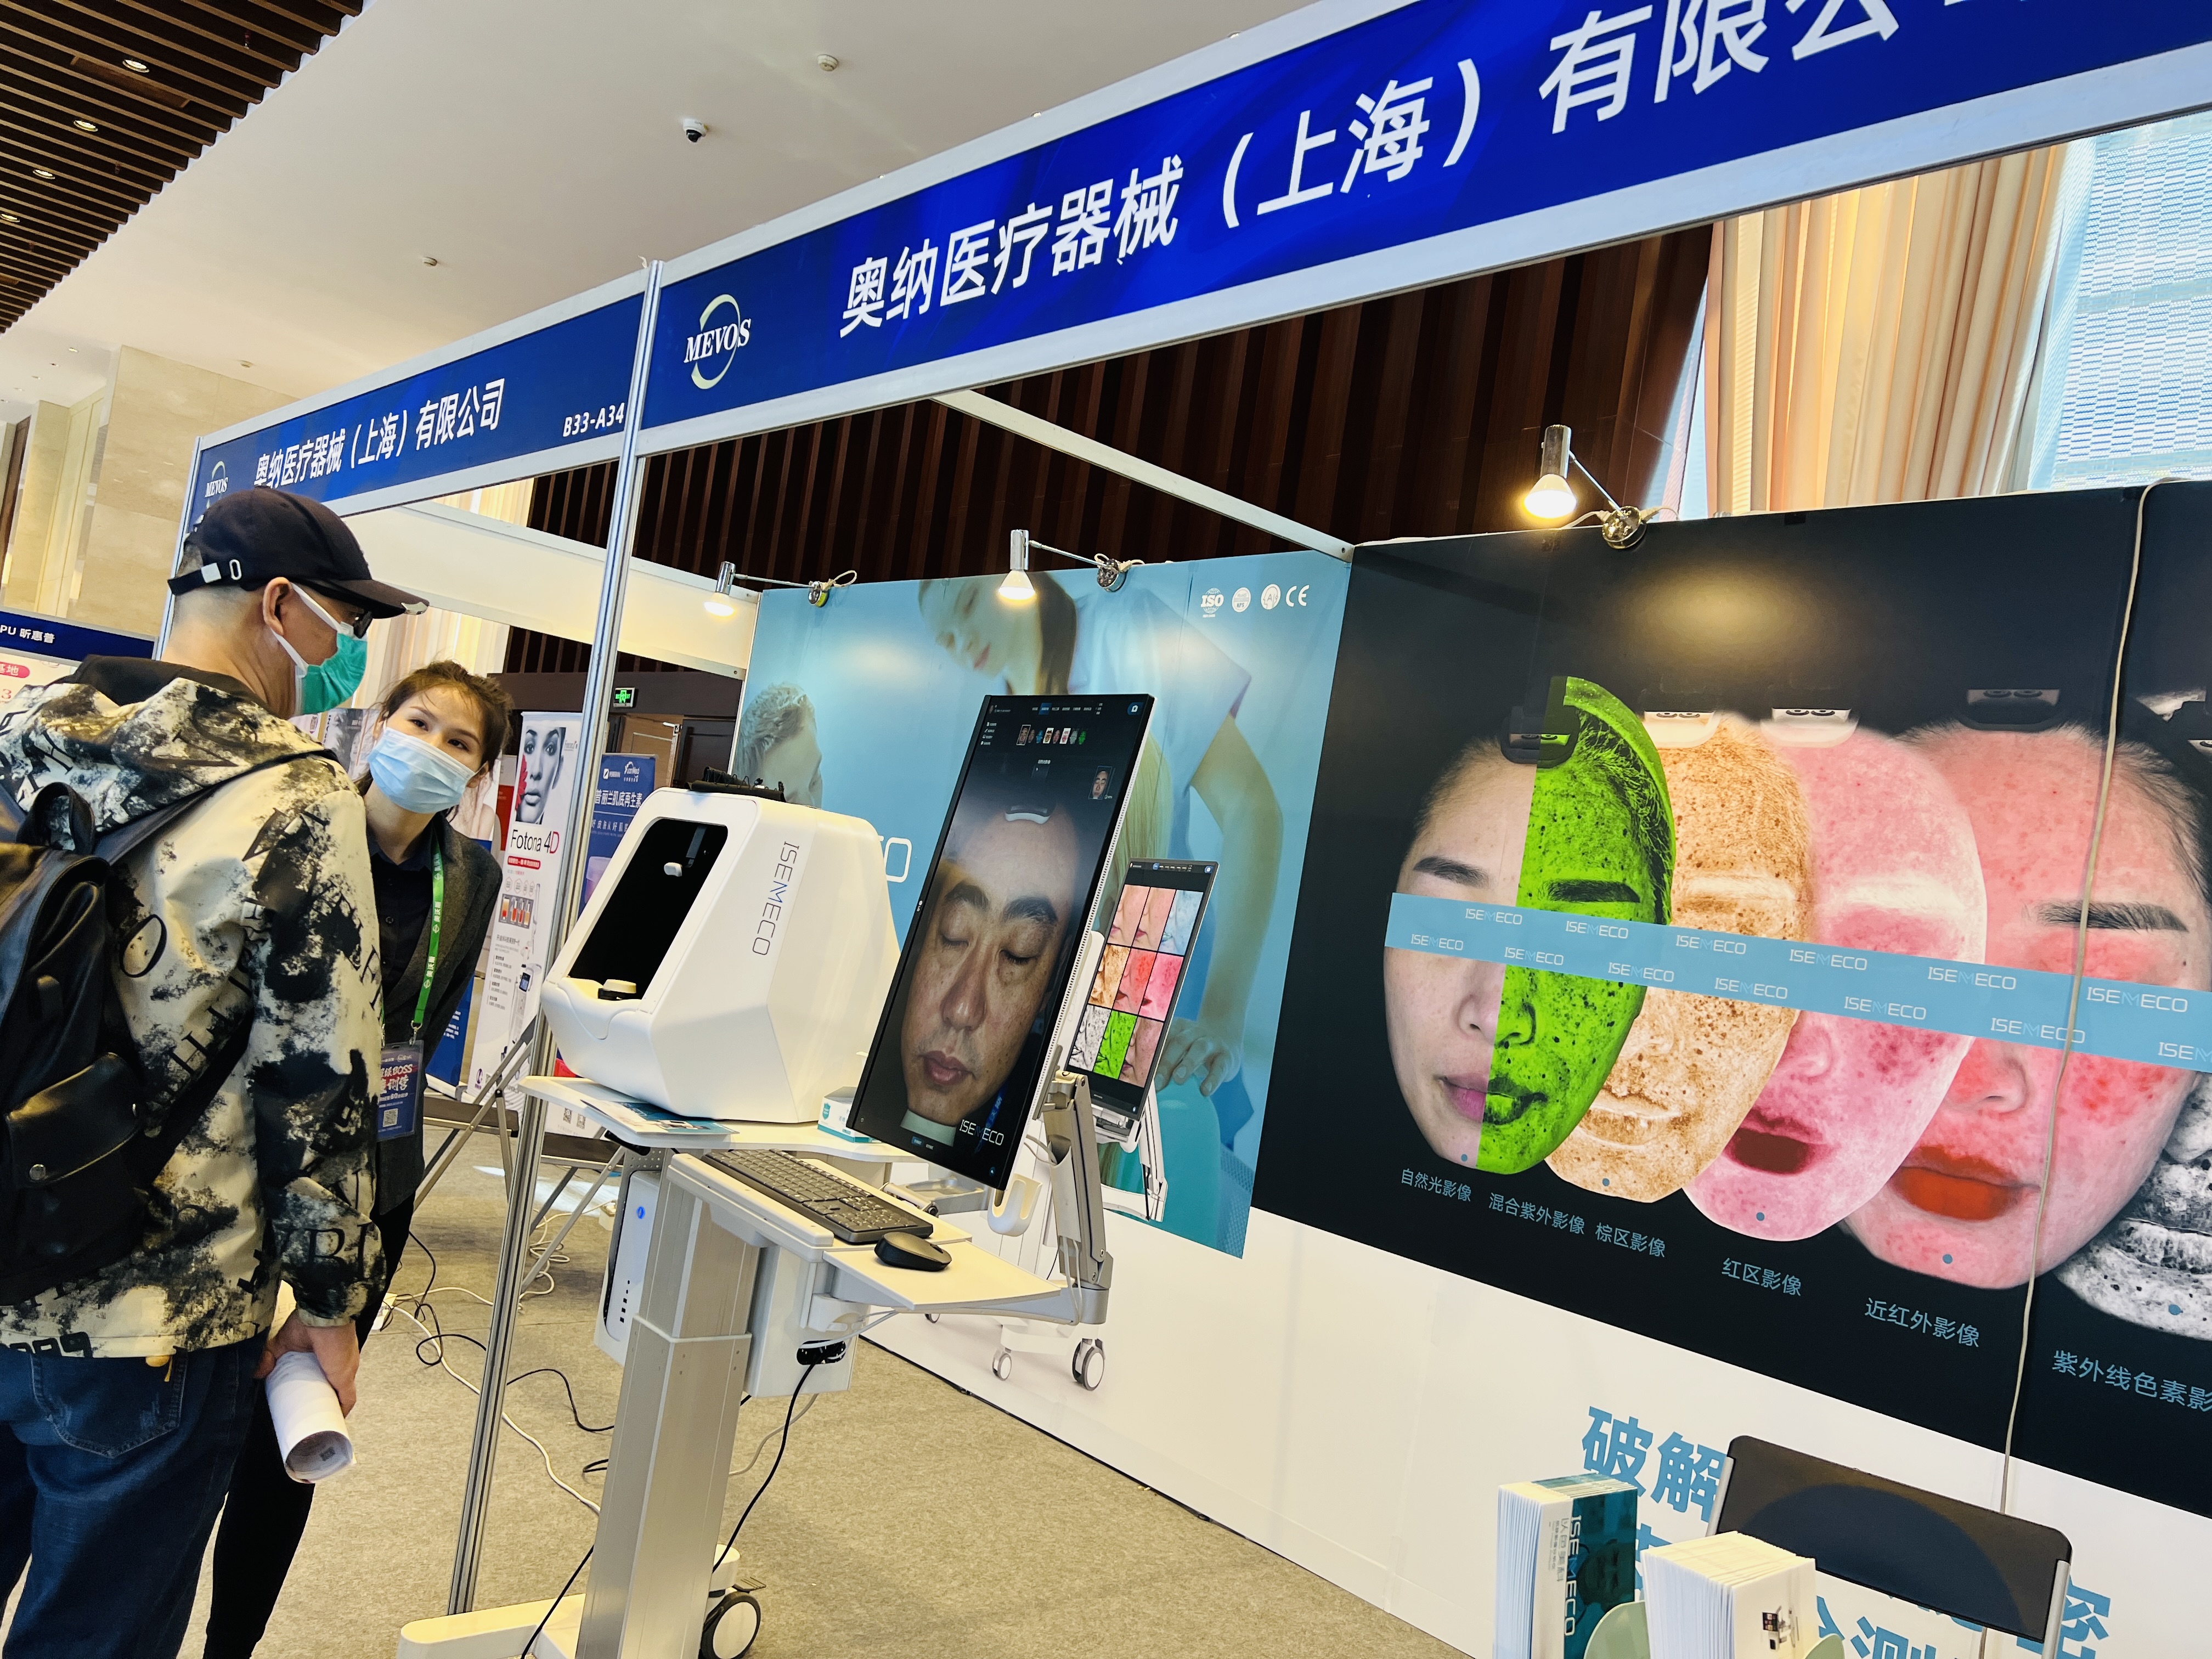 ISEMECO High-end Skin Analyzer Machine Shows i MEVOS Exhibition i Guangzhou